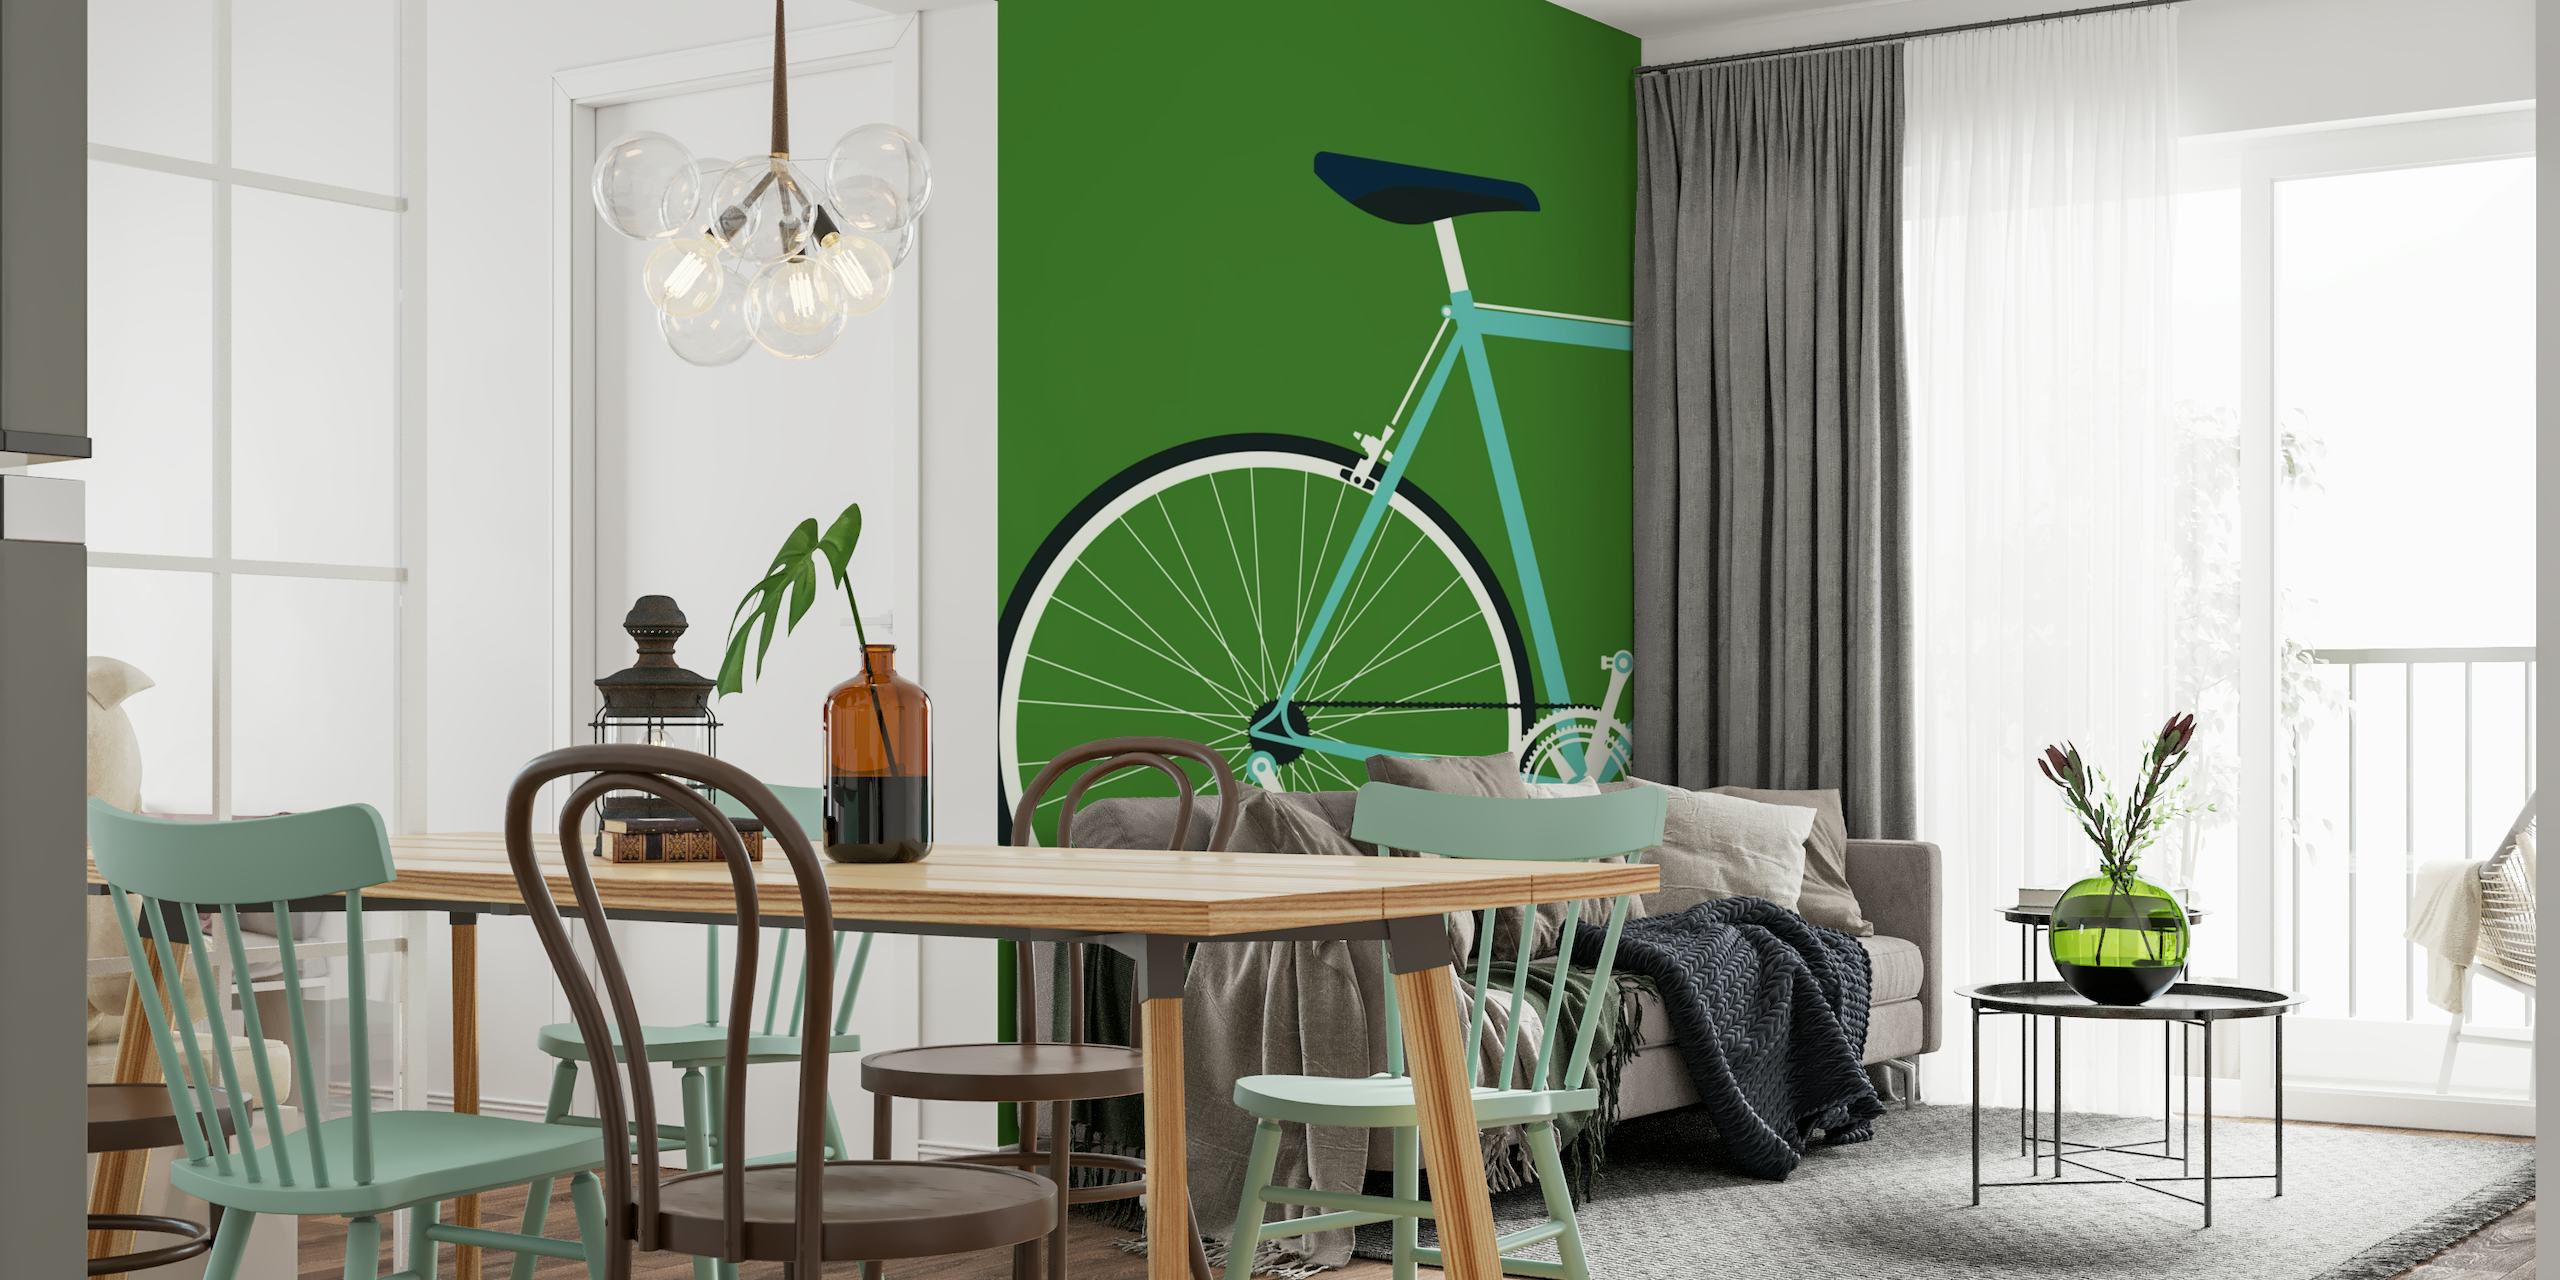 Bianchi Mural trasero con una silueta estilizada de bicicleta sobre un fondo verde